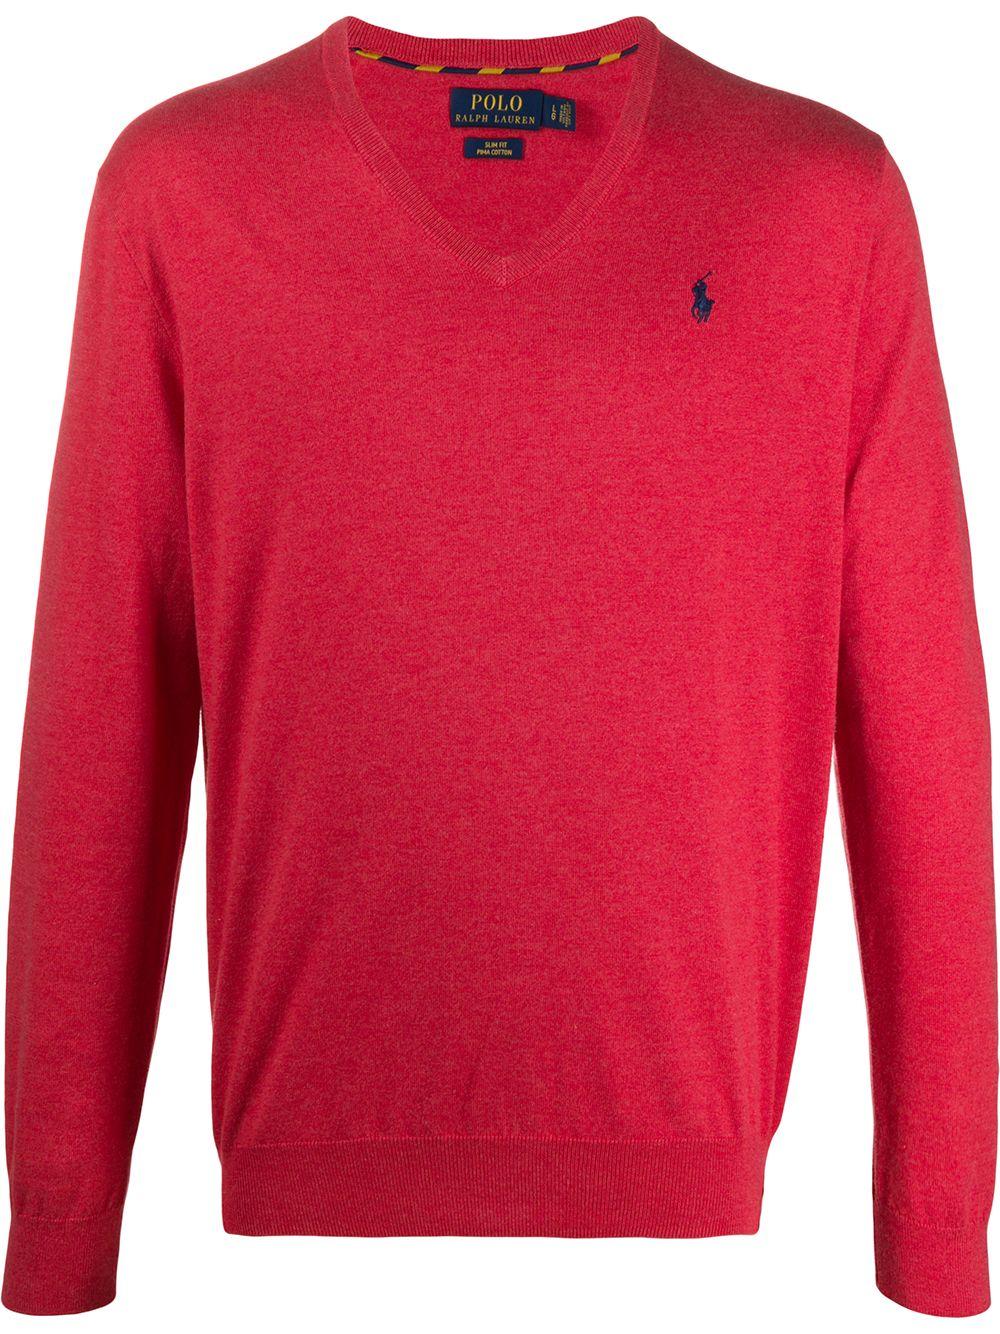 Polo Ralph Lauren V-neck Jumper in Pink for Men - Lyst